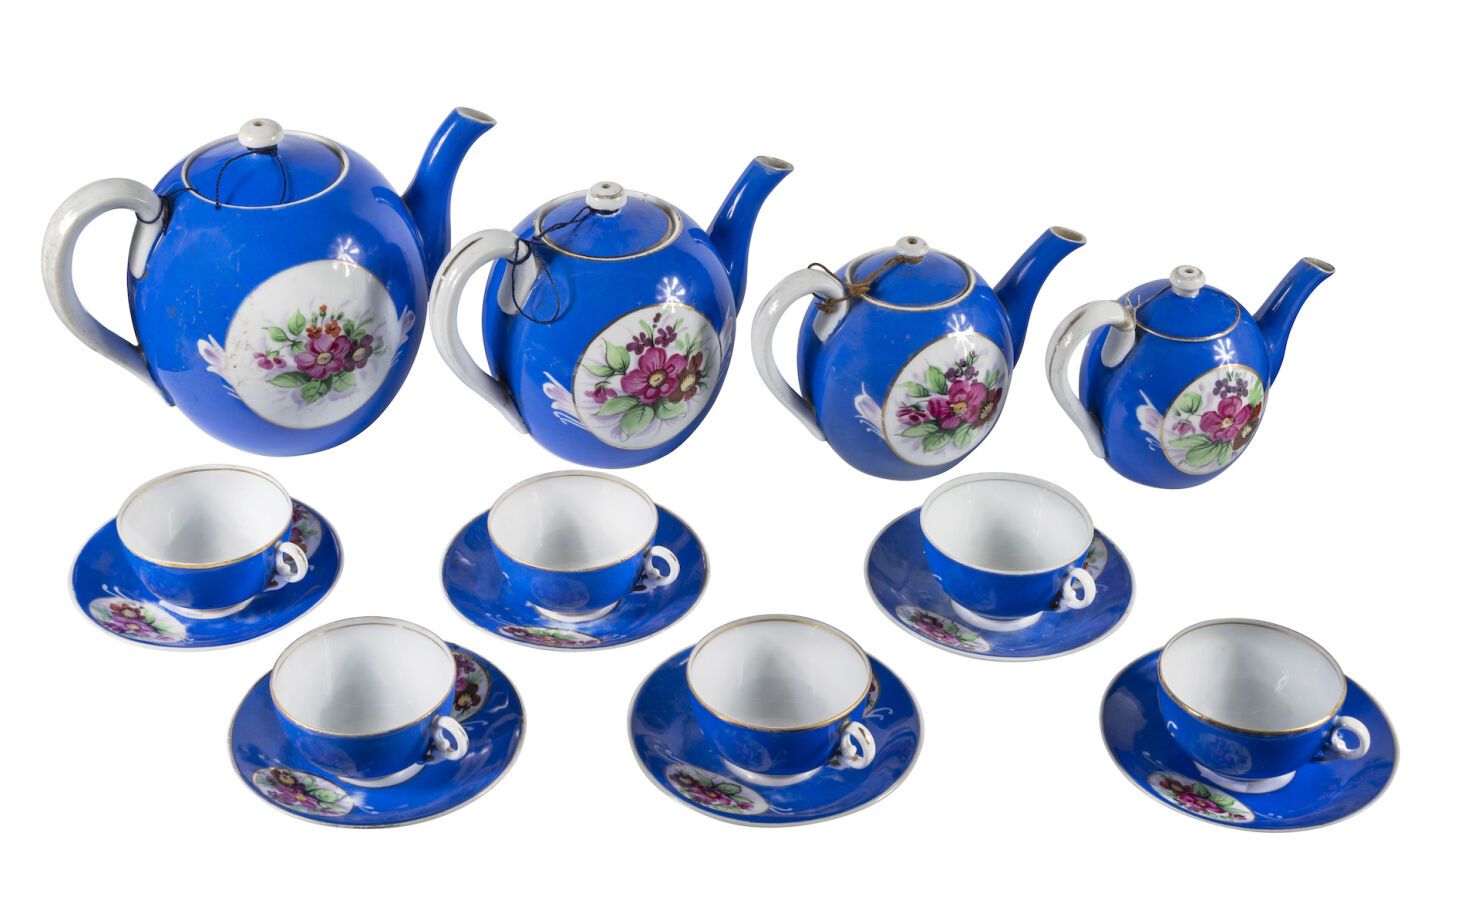 Null 加德纳。四个大小不一的茶壶，伴随着六个杯子，每个杯子都有其茶托。莫斯科，19世纪末。
蓝色瓷器。
高118至12厘米。
加德纳的红色标记。Четыре&hellip;